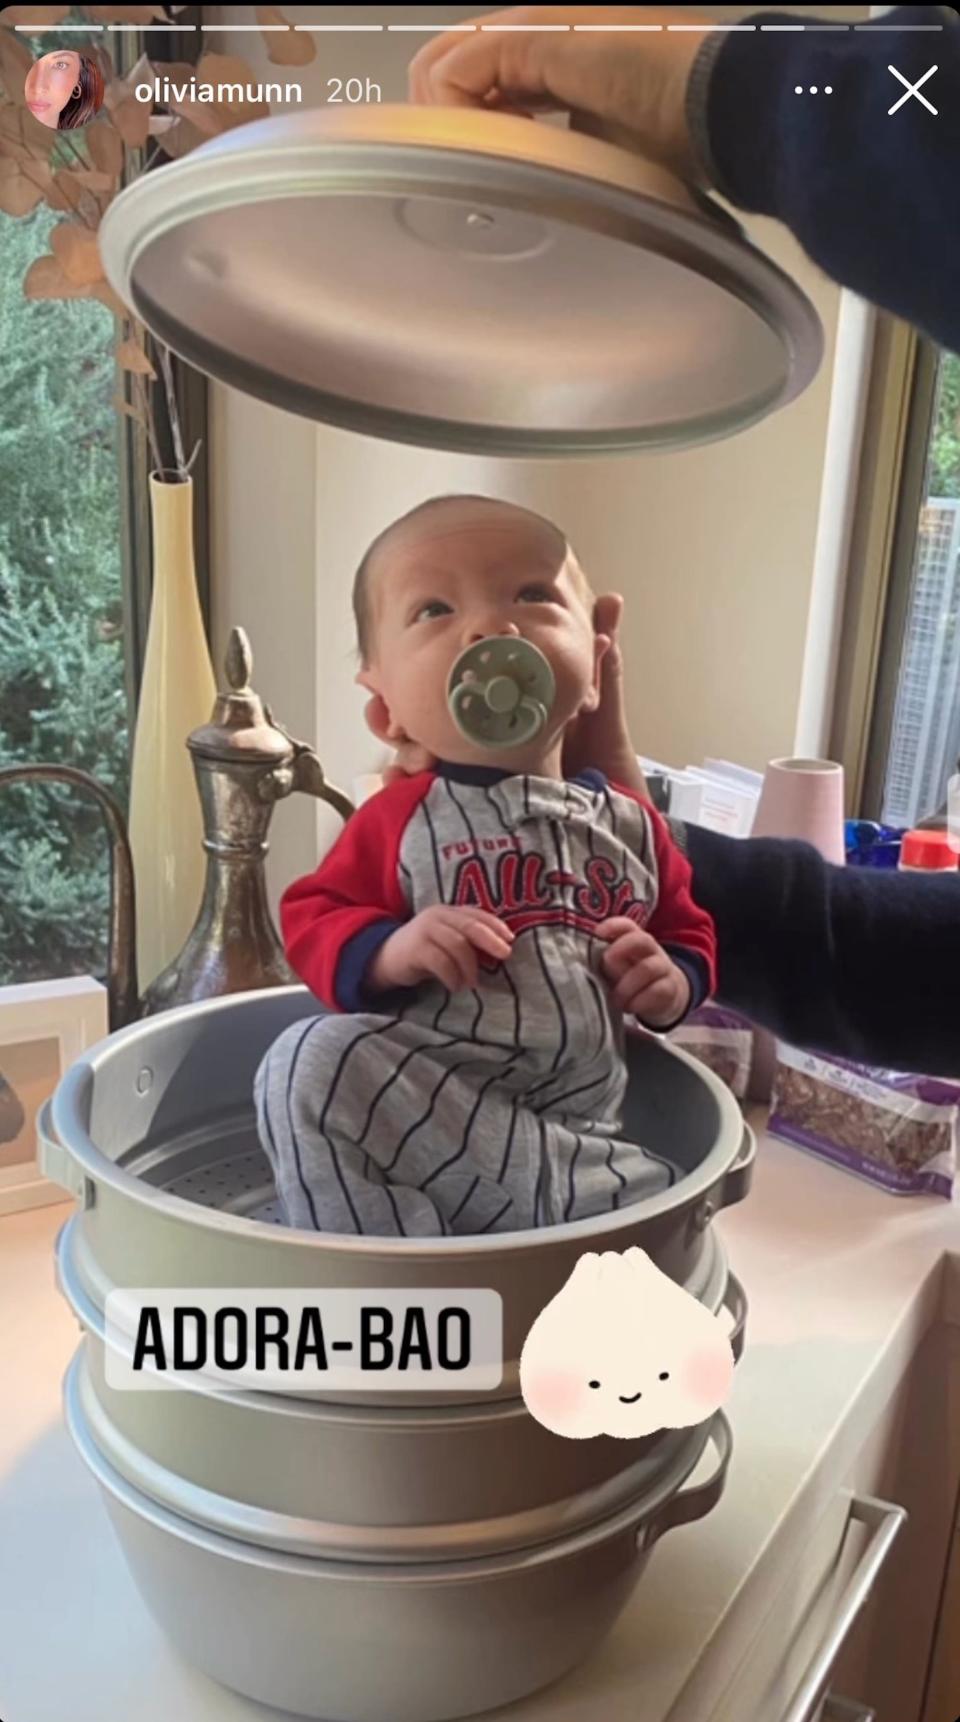 A photo of Olivia Munn and John Mulaney's son in a pot.